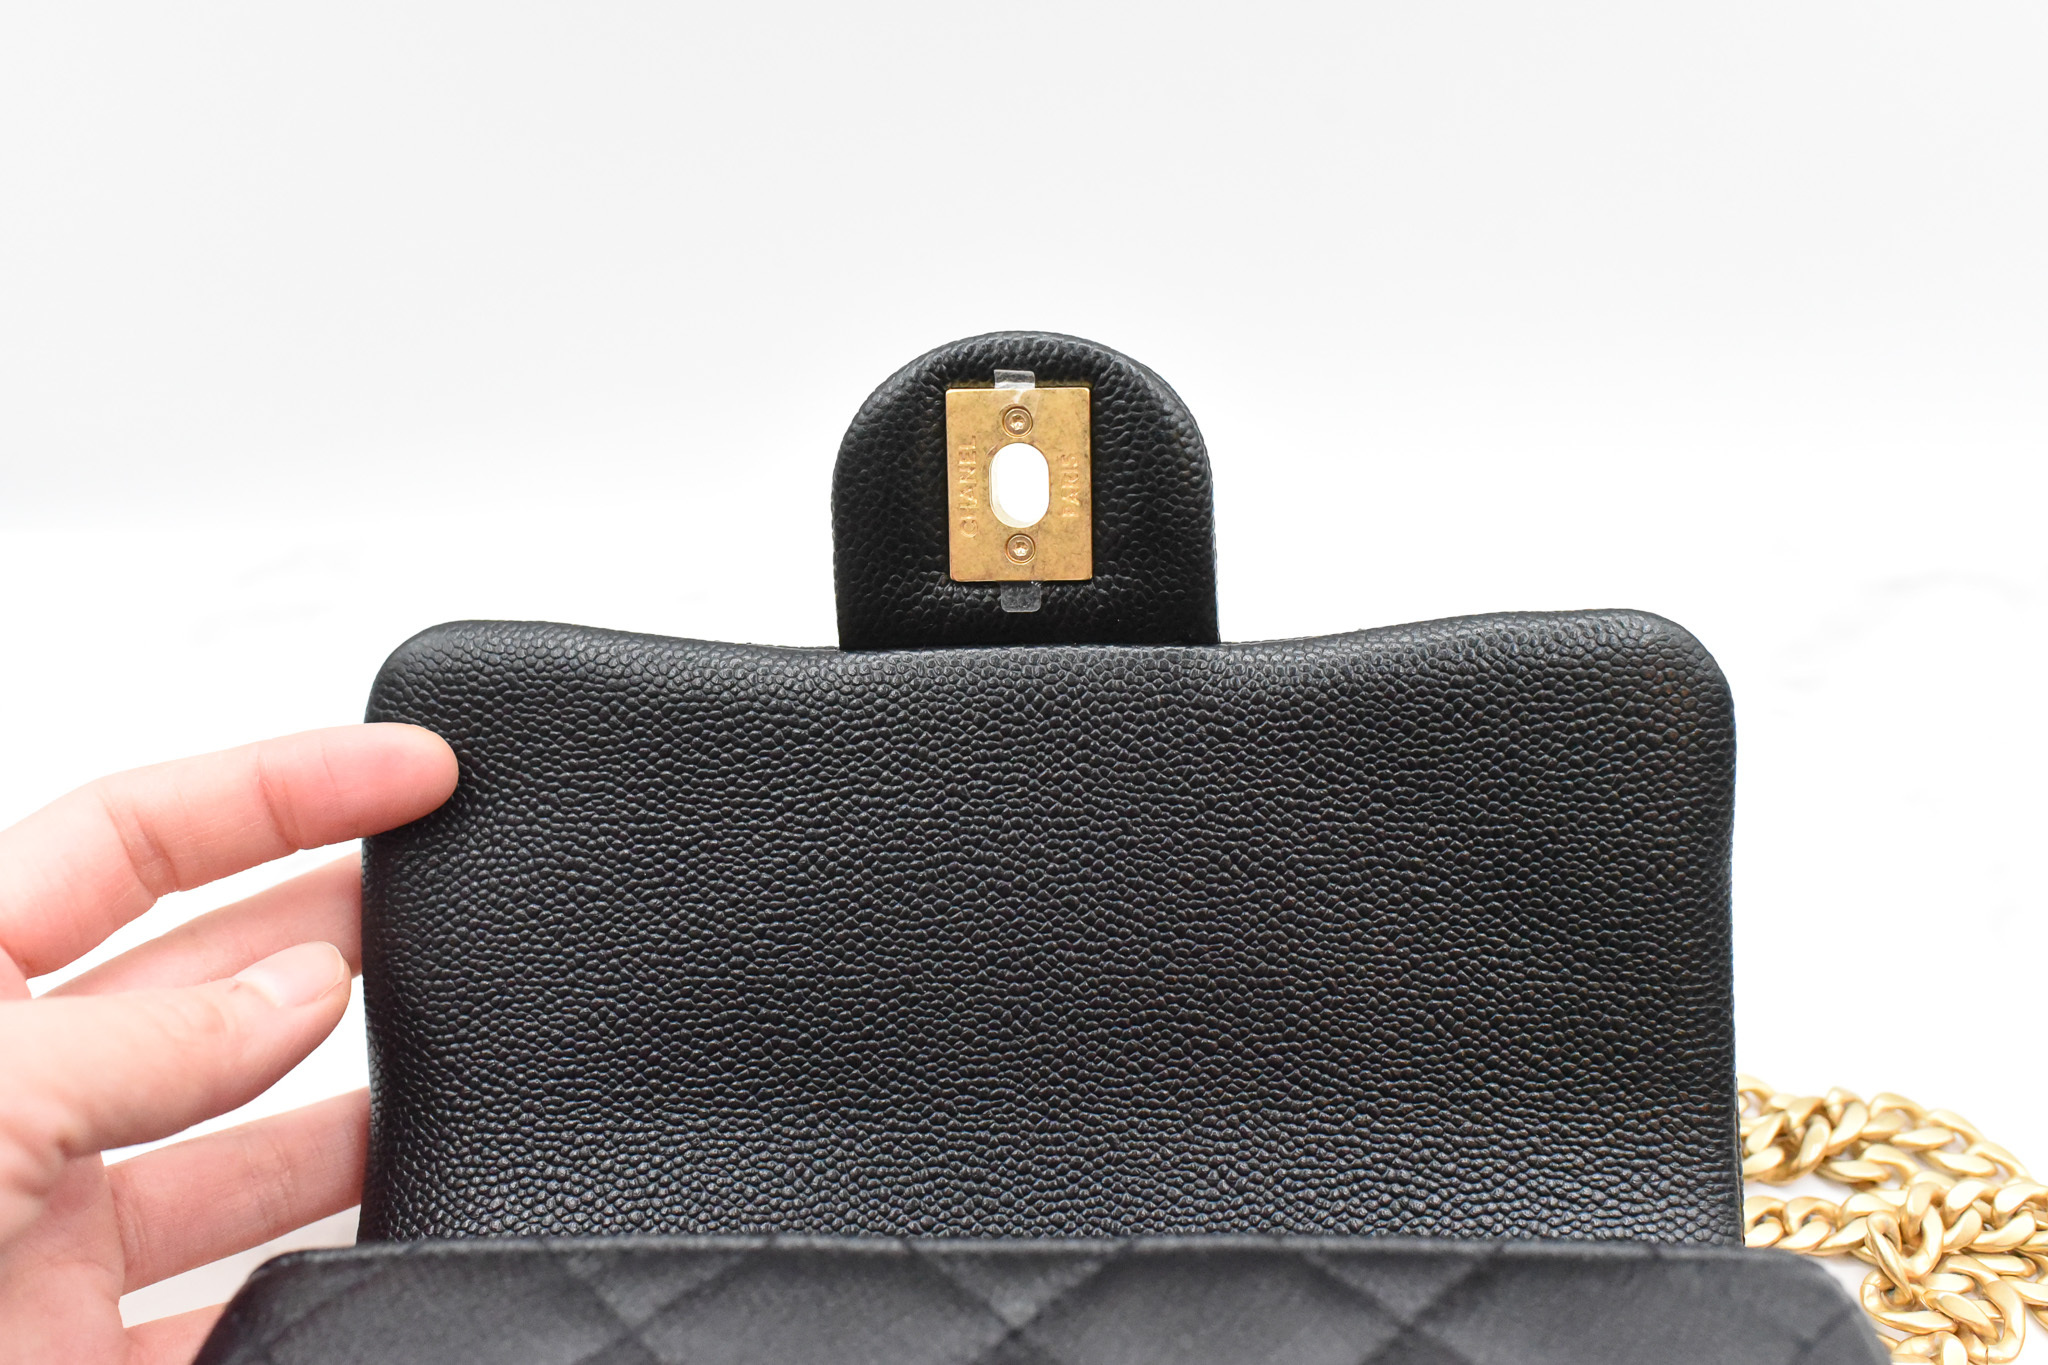 Chanel Seasonal Sweetheart Mini Rectangular Flap, Black Caviar Leather,  Gold Hardware, New in Box GA001